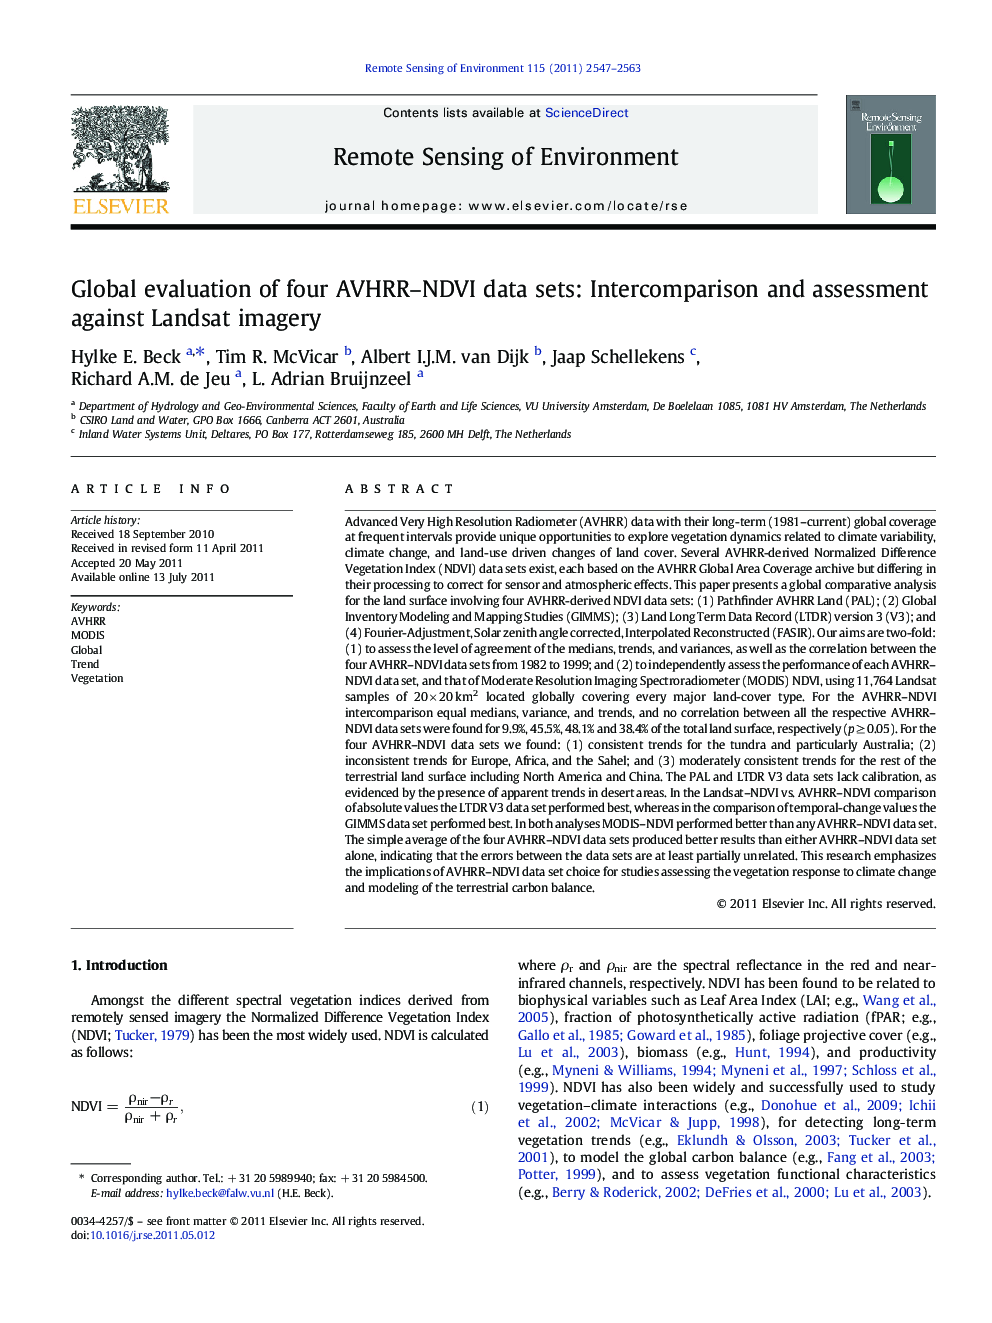 Global evaluation of four AVHRR–NDVI data sets: Intercomparison and assessment against Landsat imagery